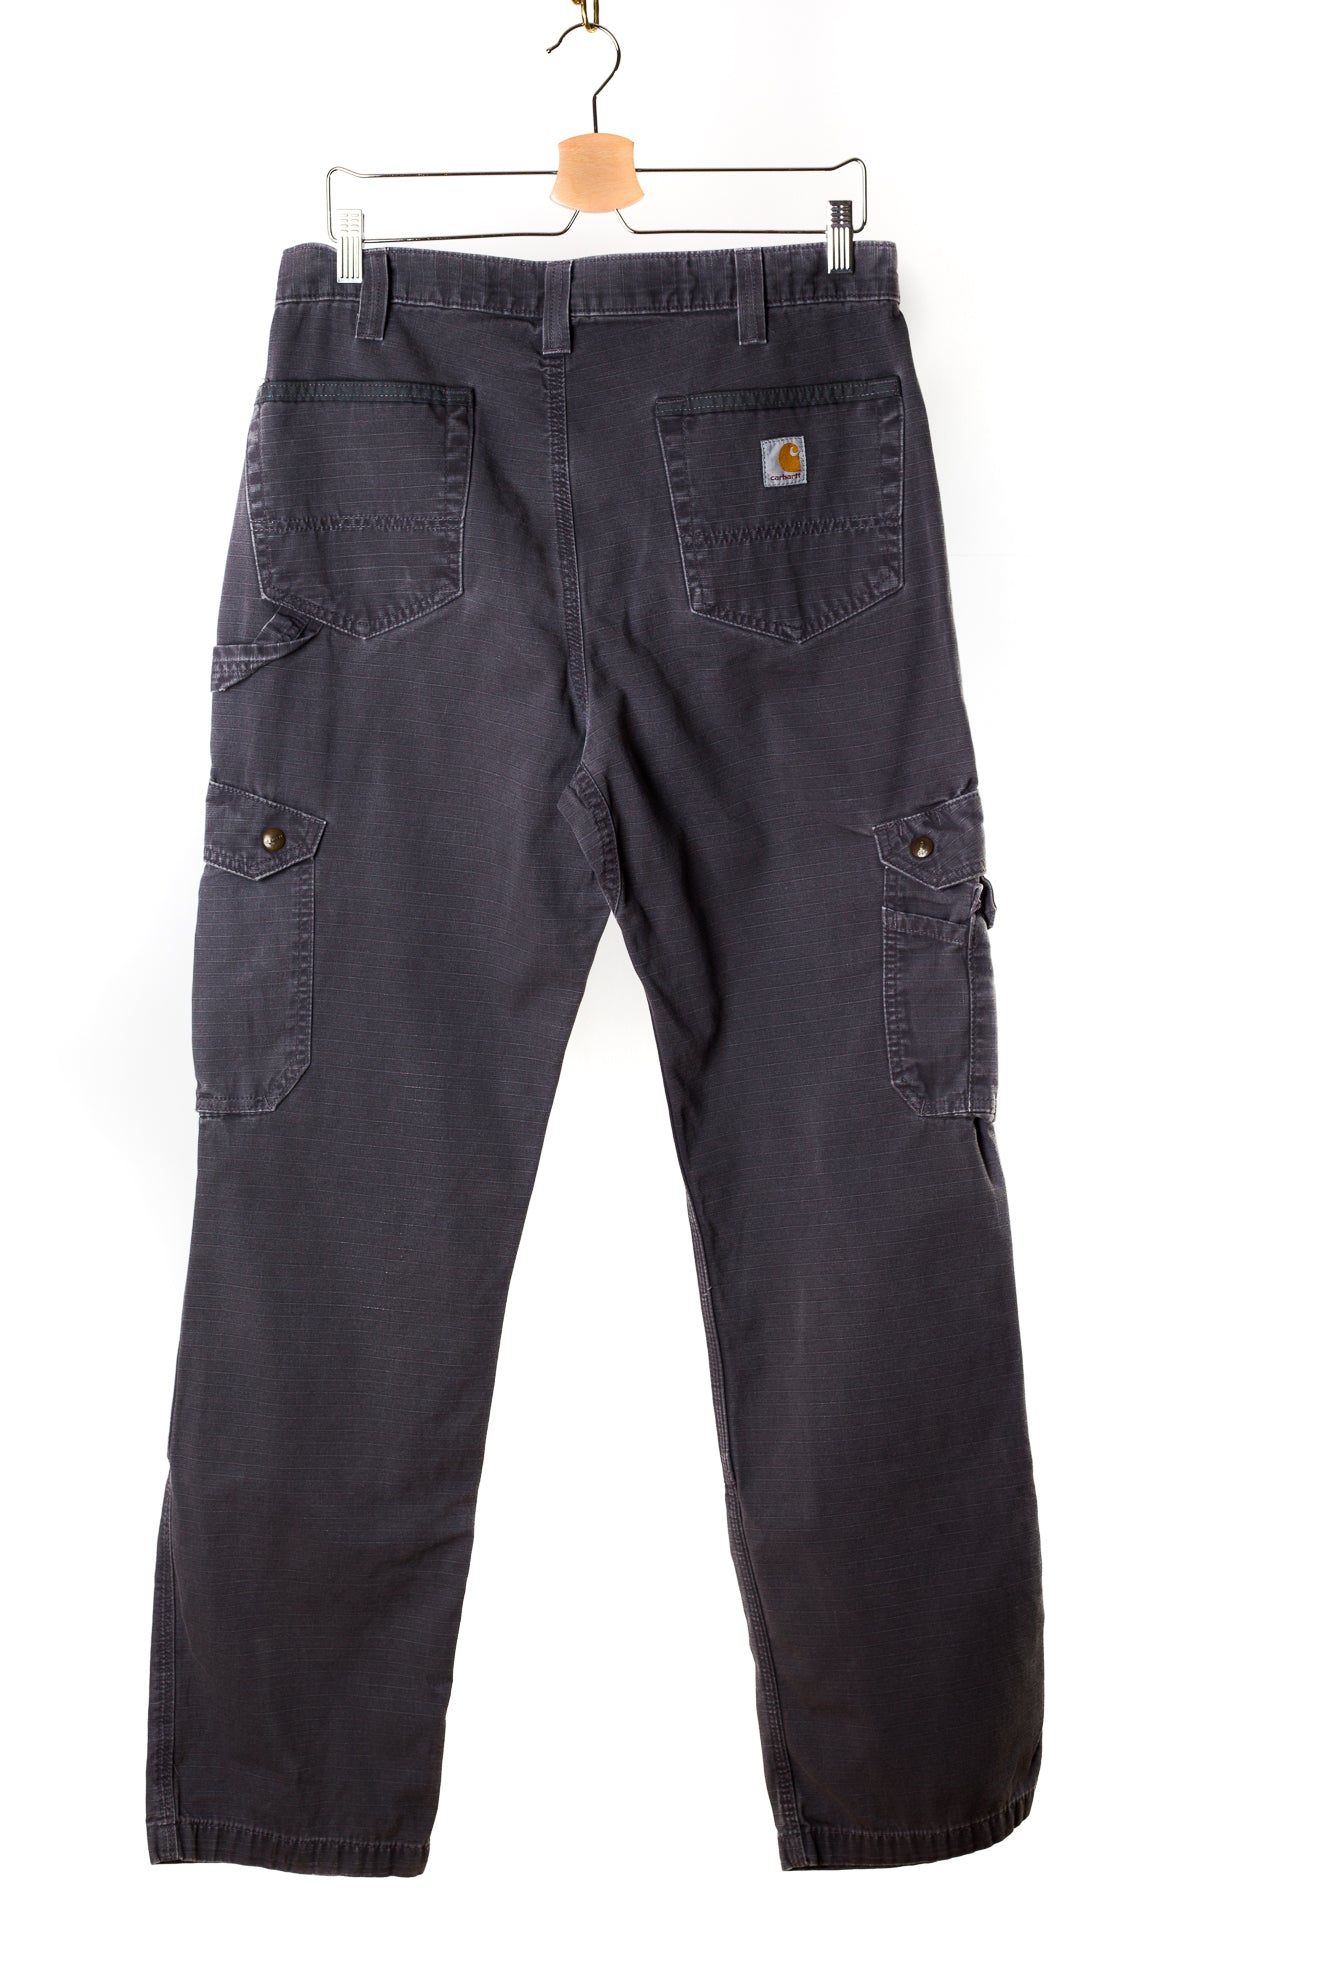 grijze-carhartt-jeans-achterkant